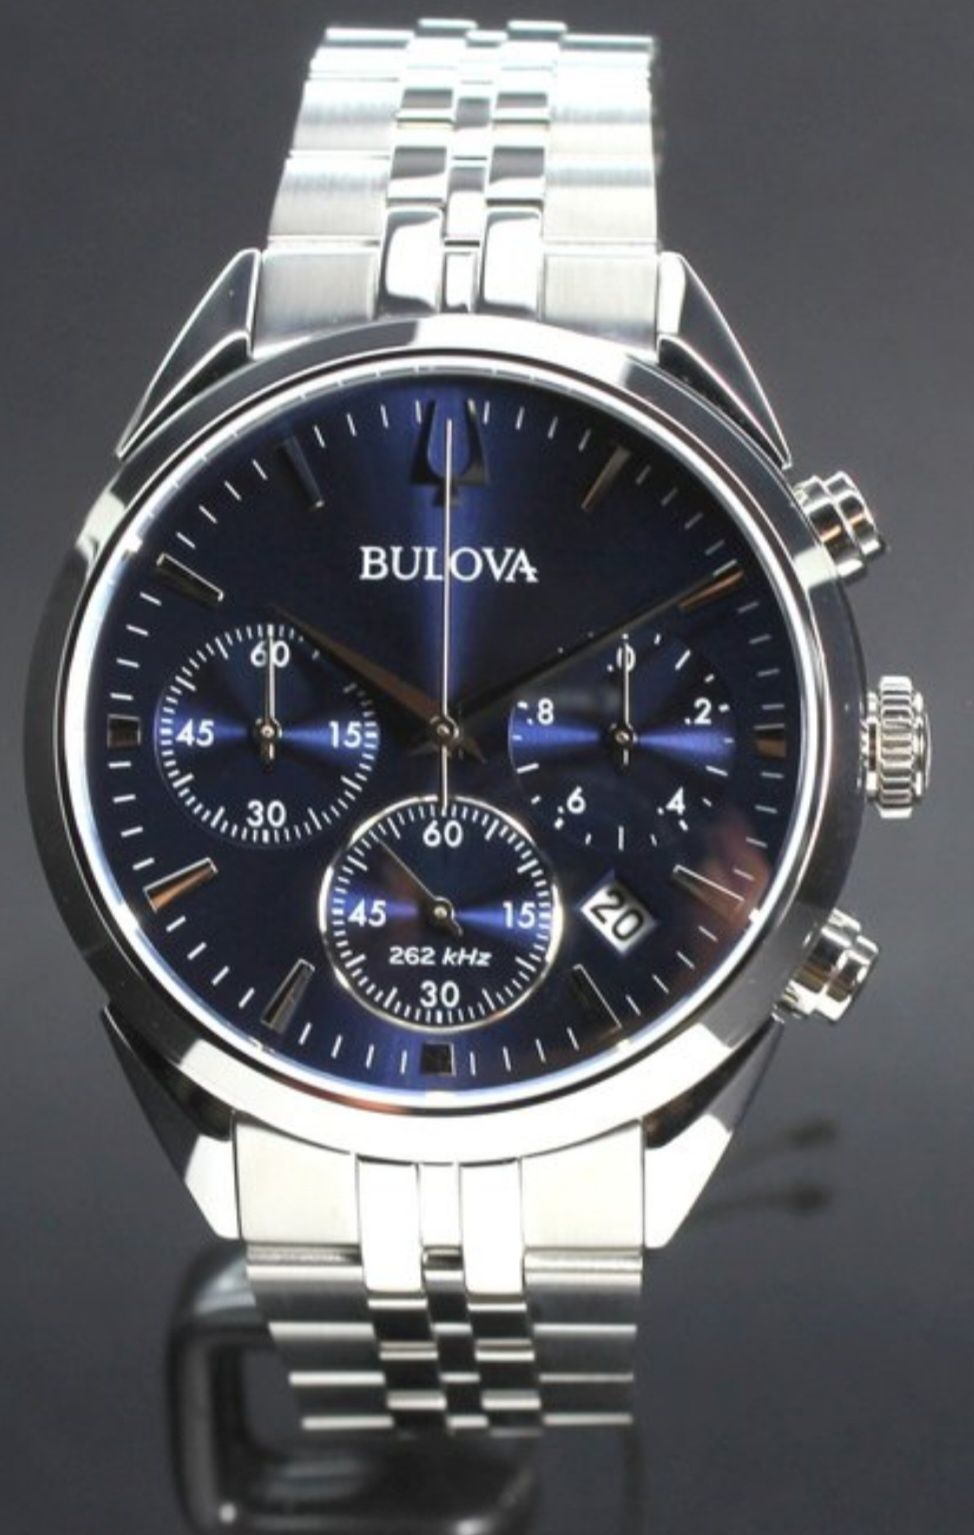 Relógio cronómetro Bulova Chrono High Precision 262khz